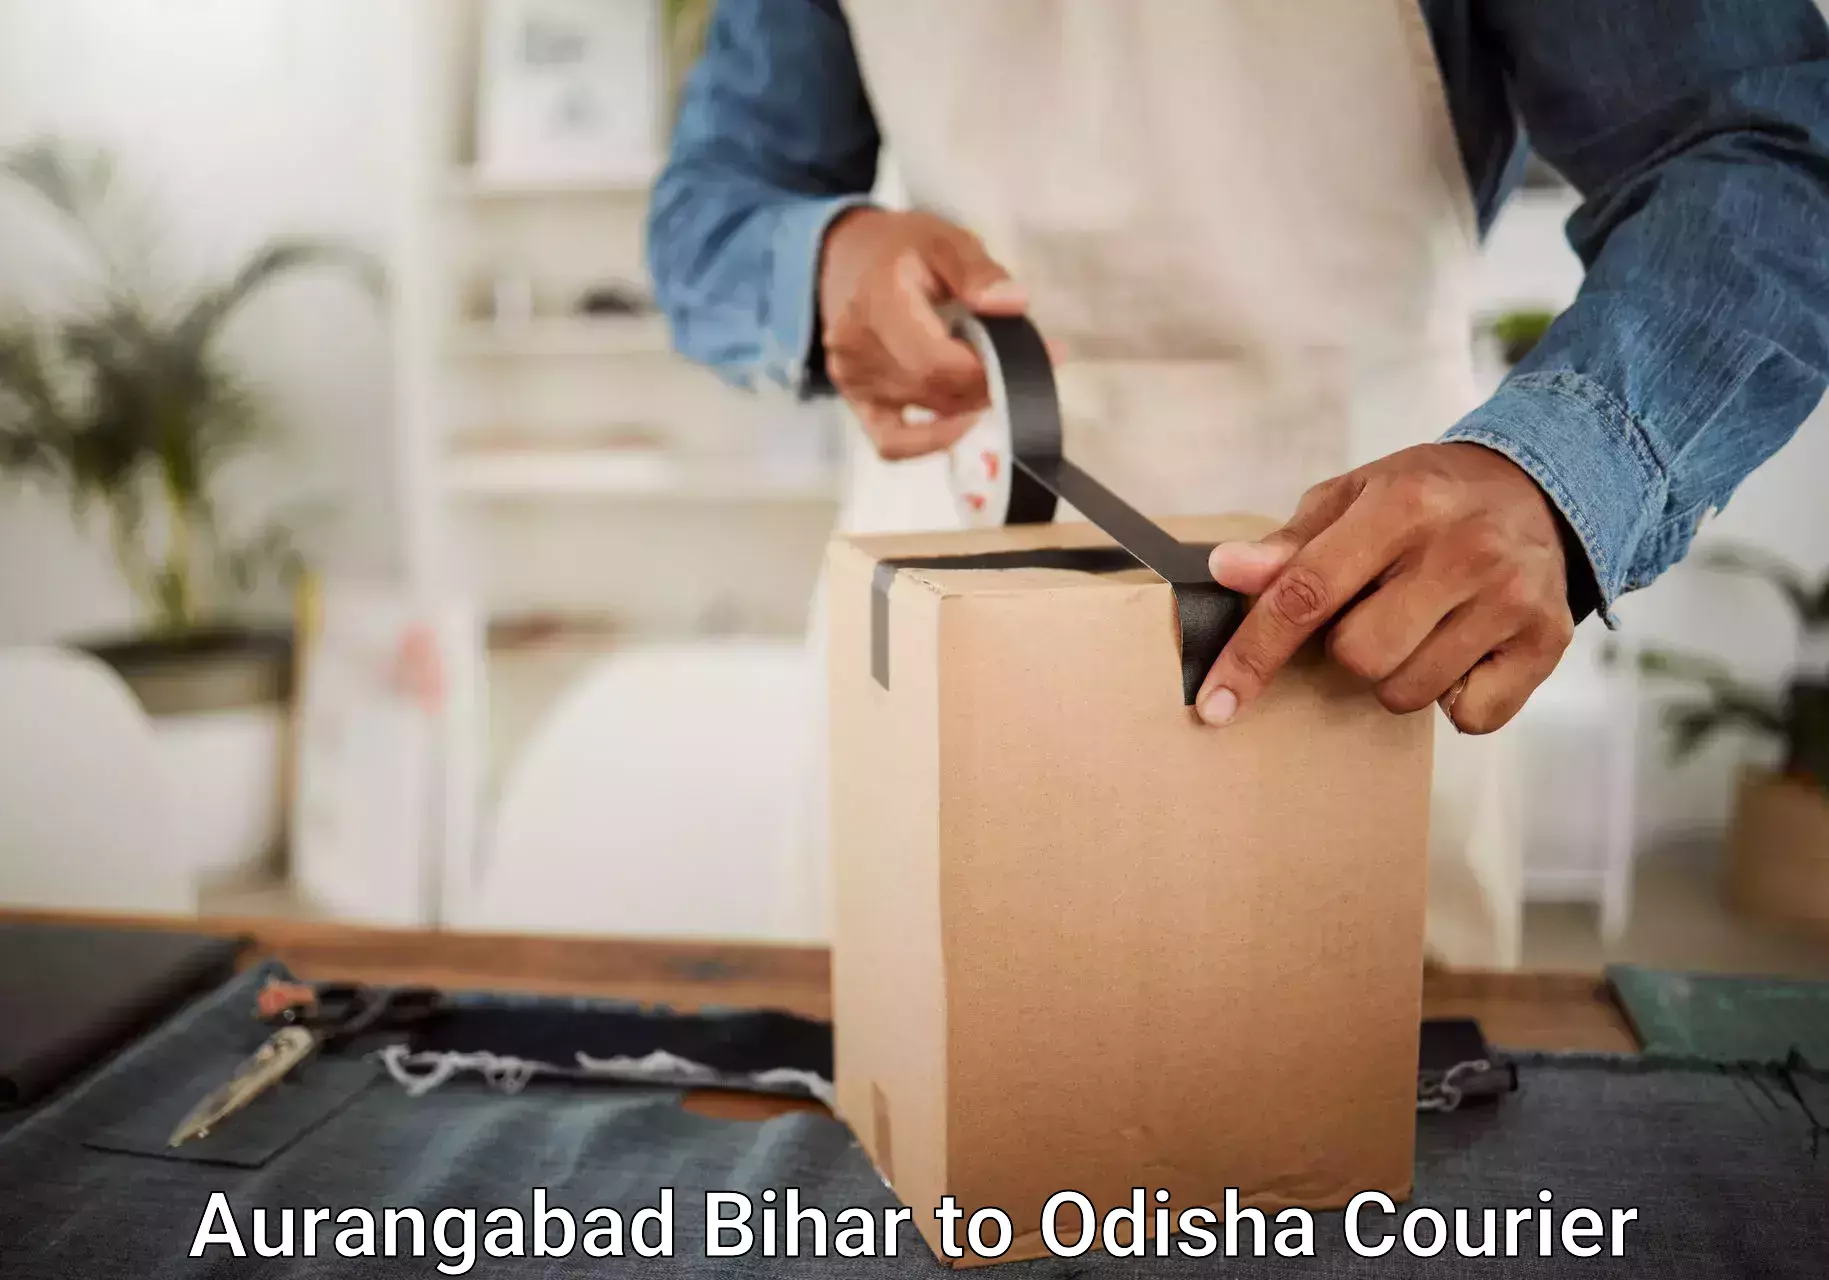 Baggage transport innovation Aurangabad Bihar to Agarpada